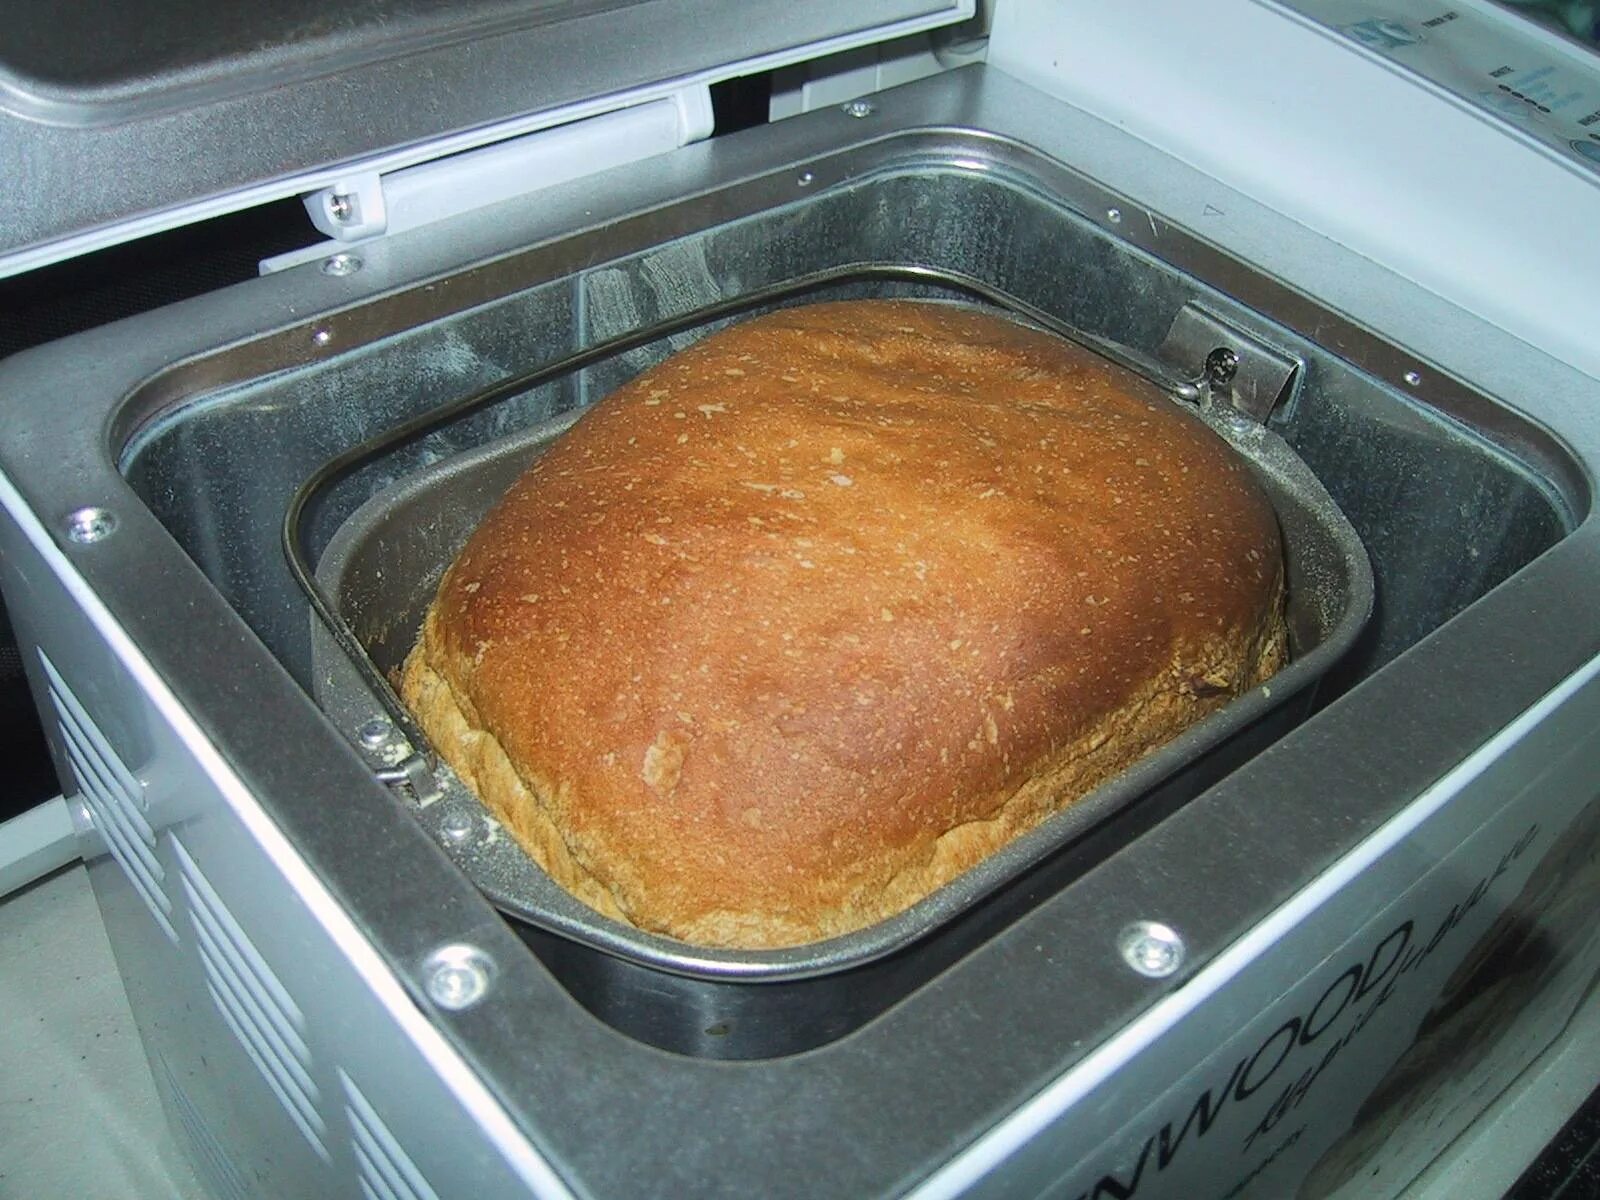 Видео рецепт хлебопечки. Хлеб в хлебопечке. Хлебопечка с хлебом. Выпечка хлеба в хлебопечке. Домашний хлеб из хлебопечки.